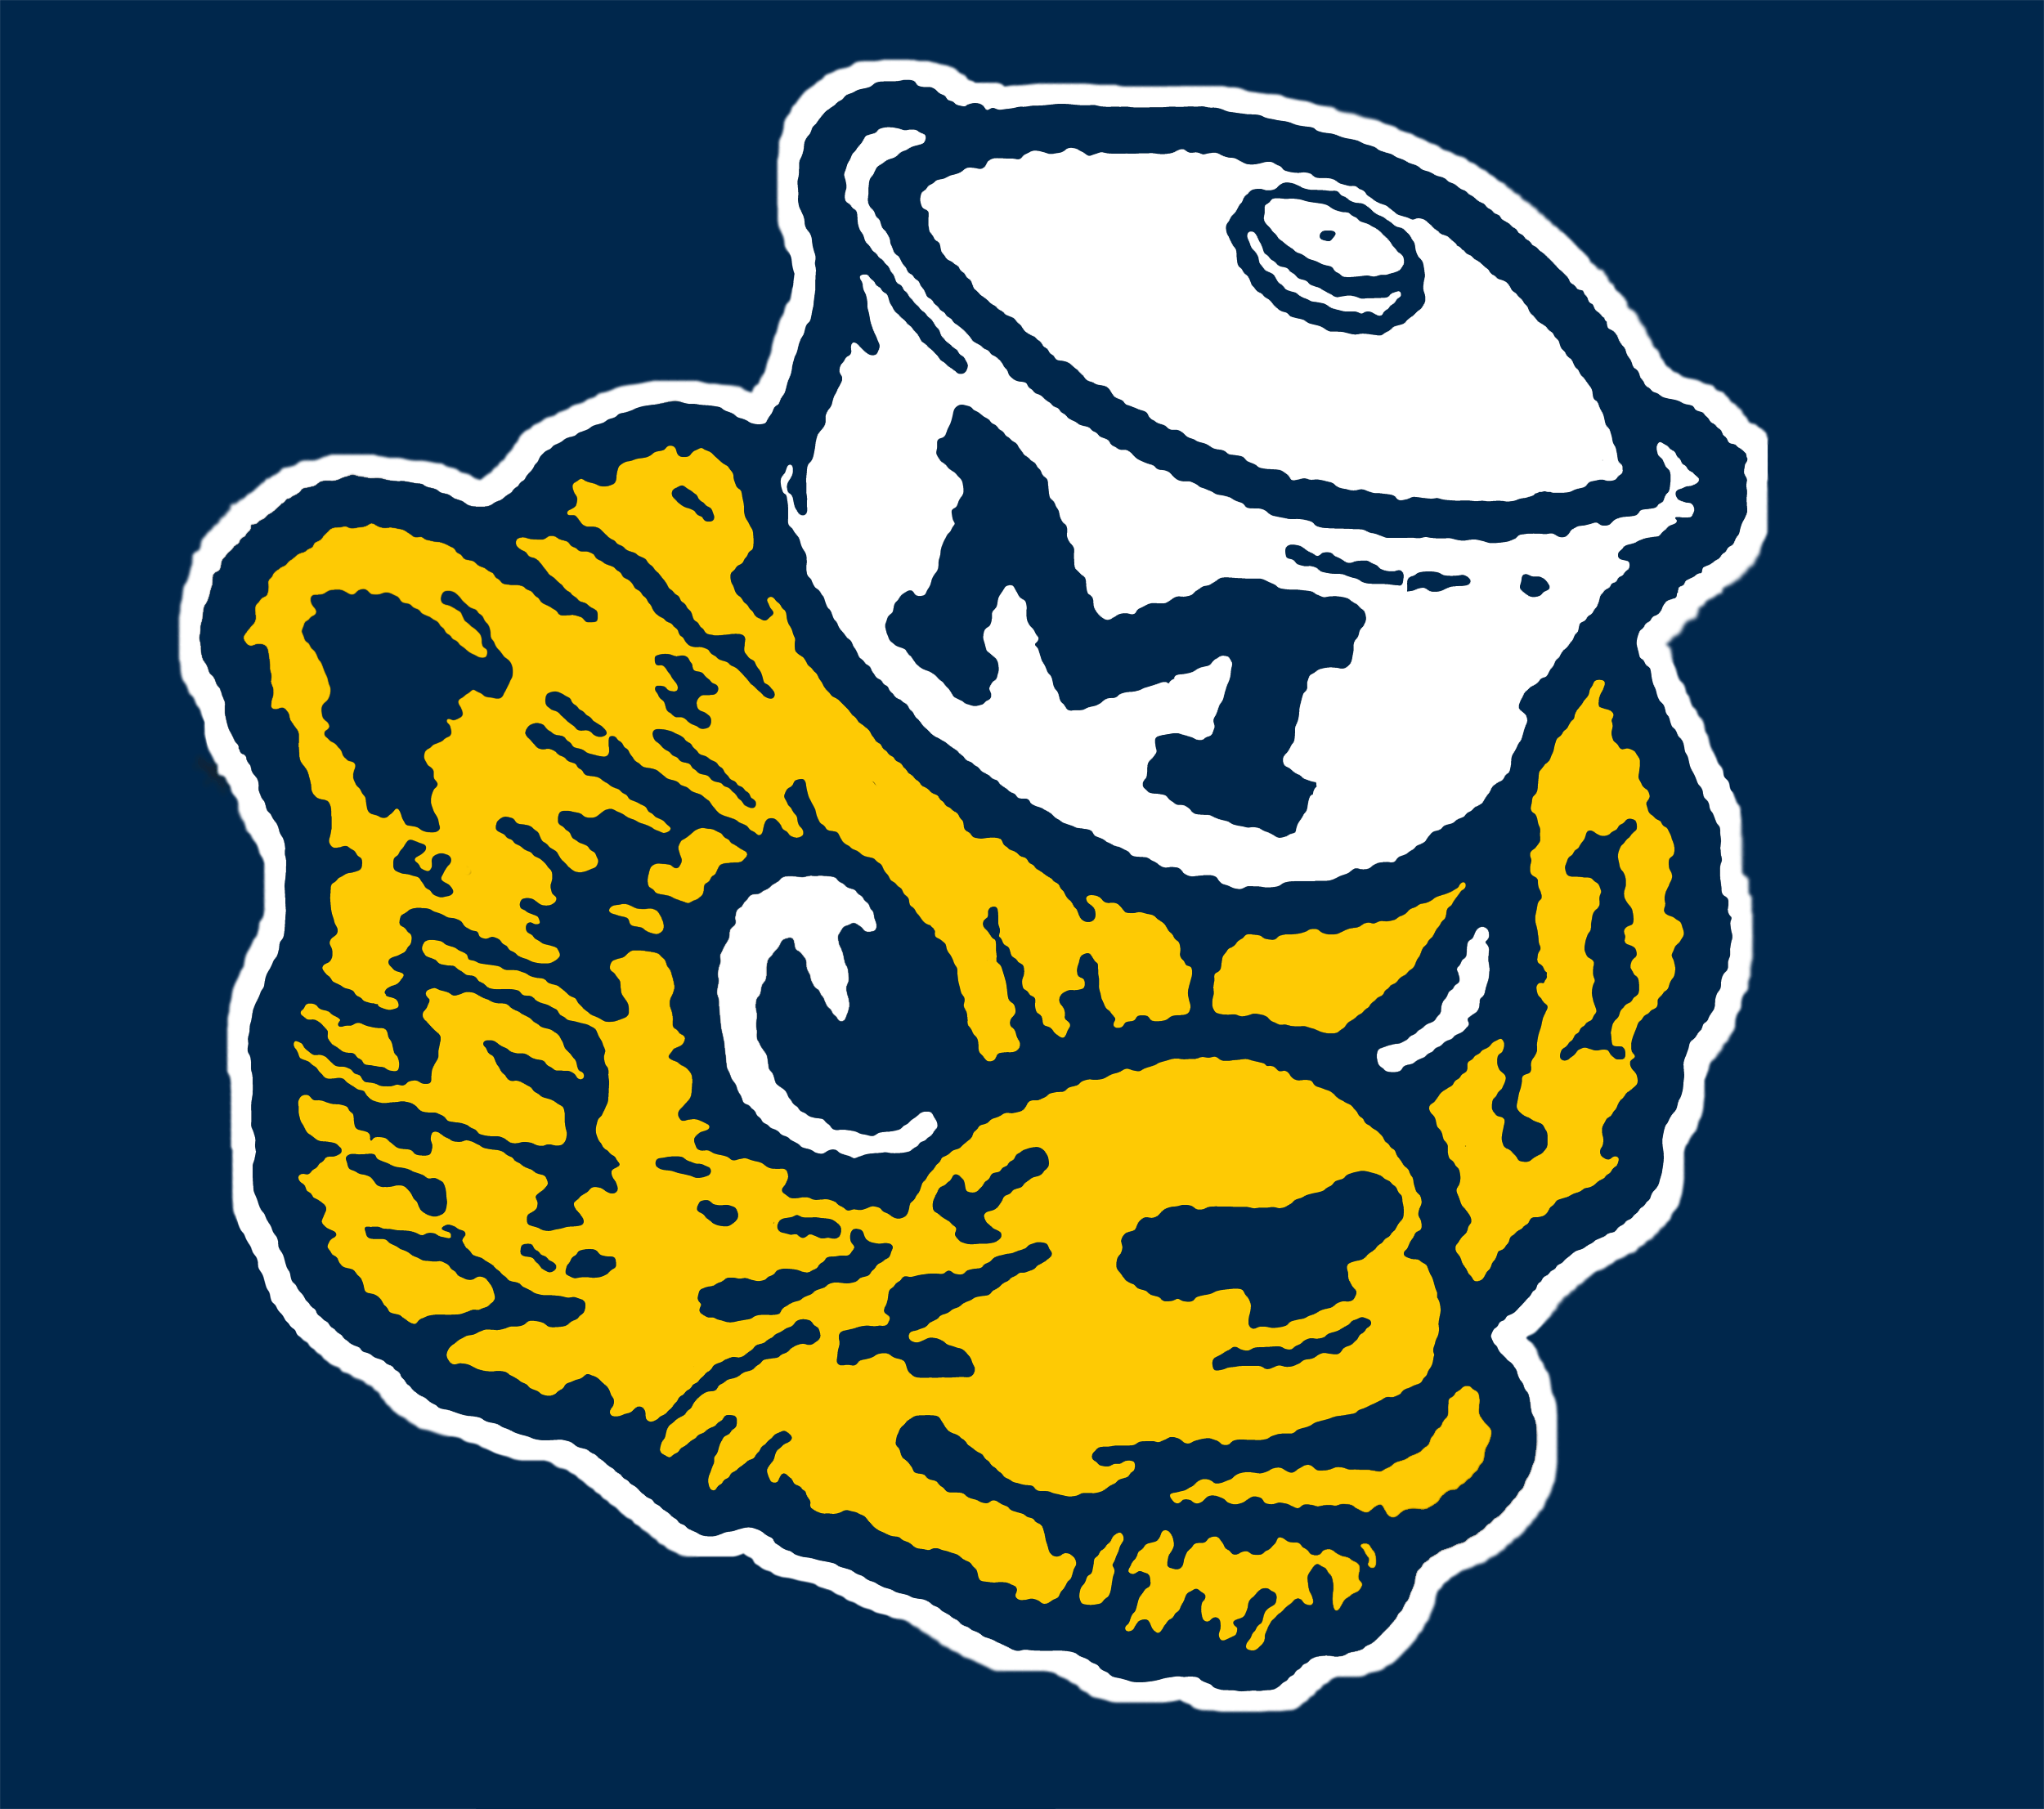 University of Michigan Wolverines Logo - Michigan Wolverines Wallpapers - Wallpaper Cave